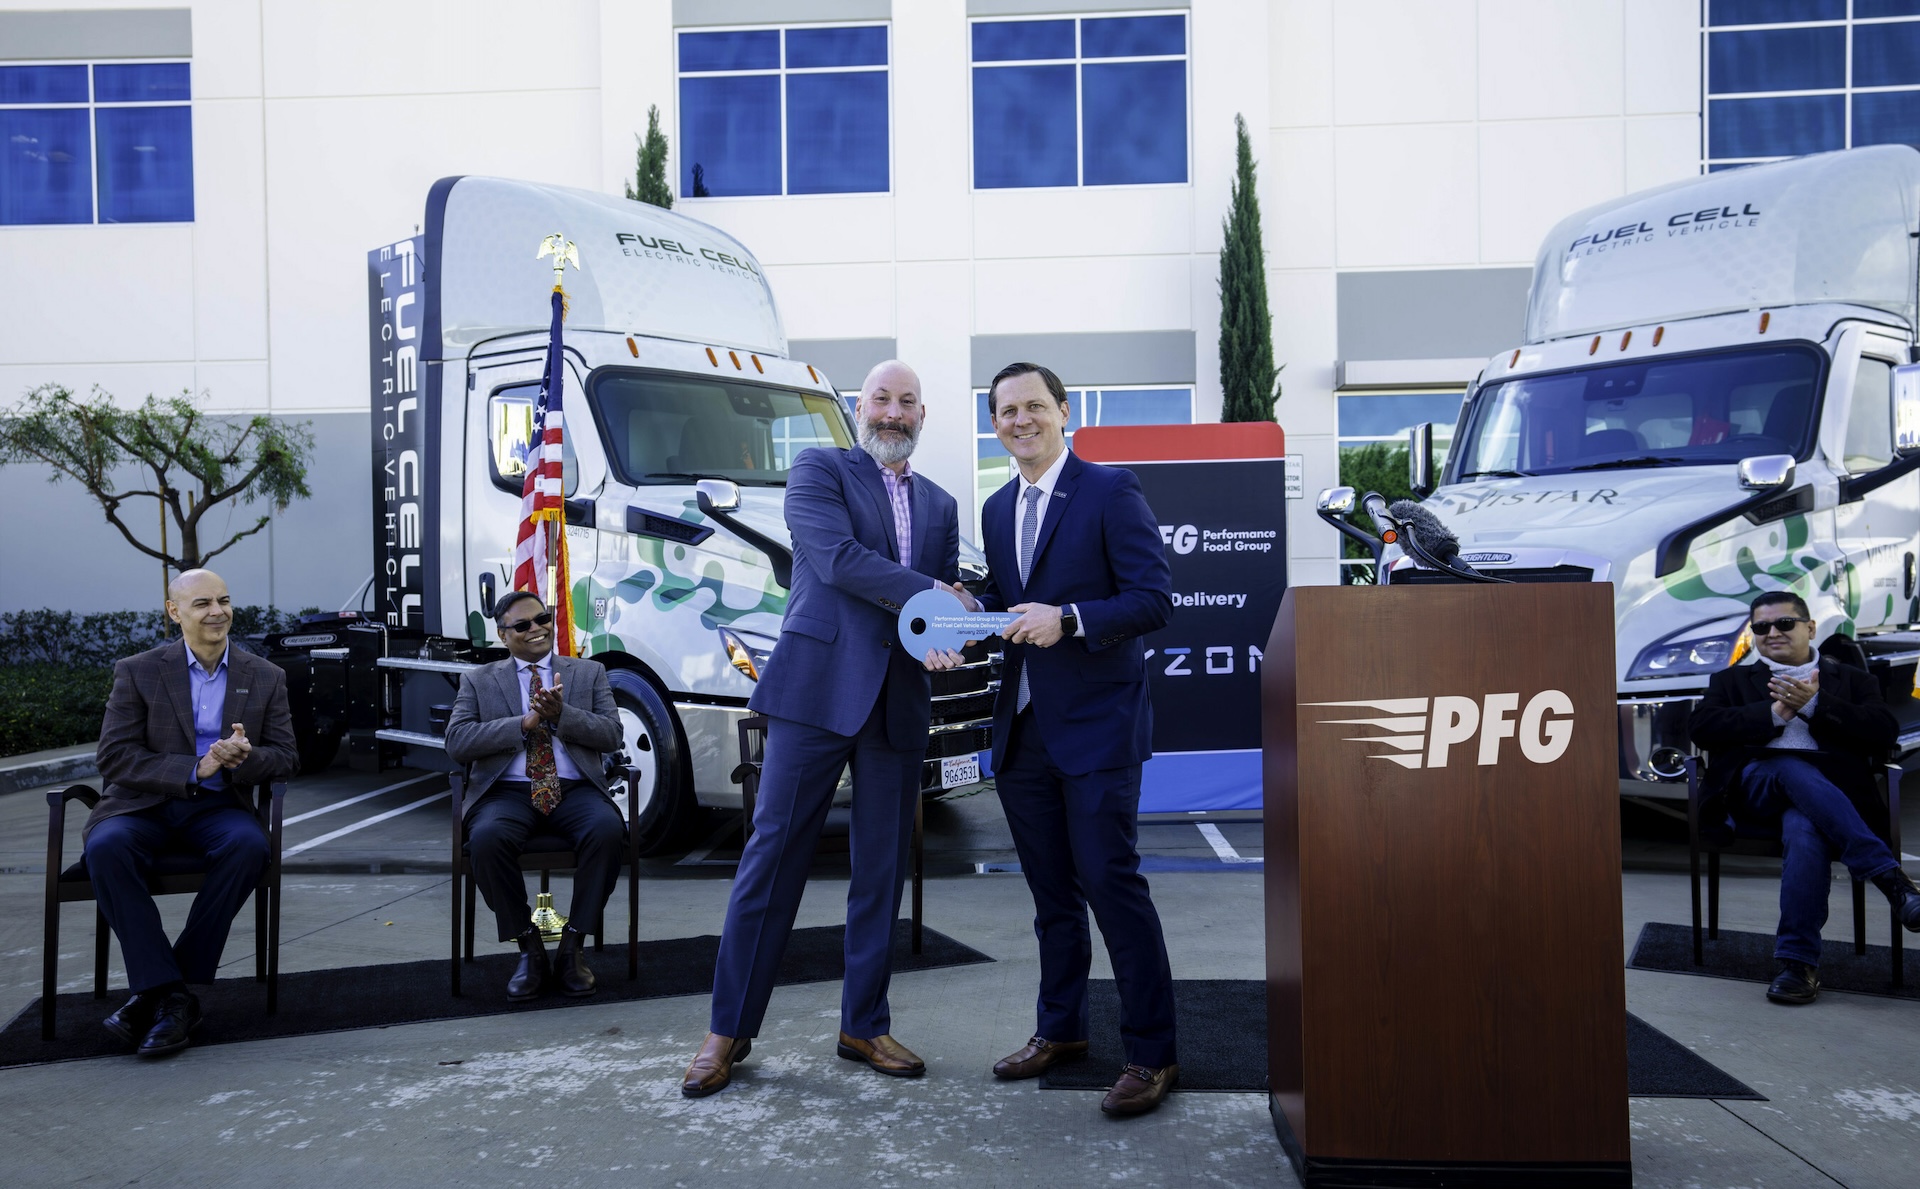 Hyzon-PFG Alliance: Hydrogen Trucks Launched - The EV Report